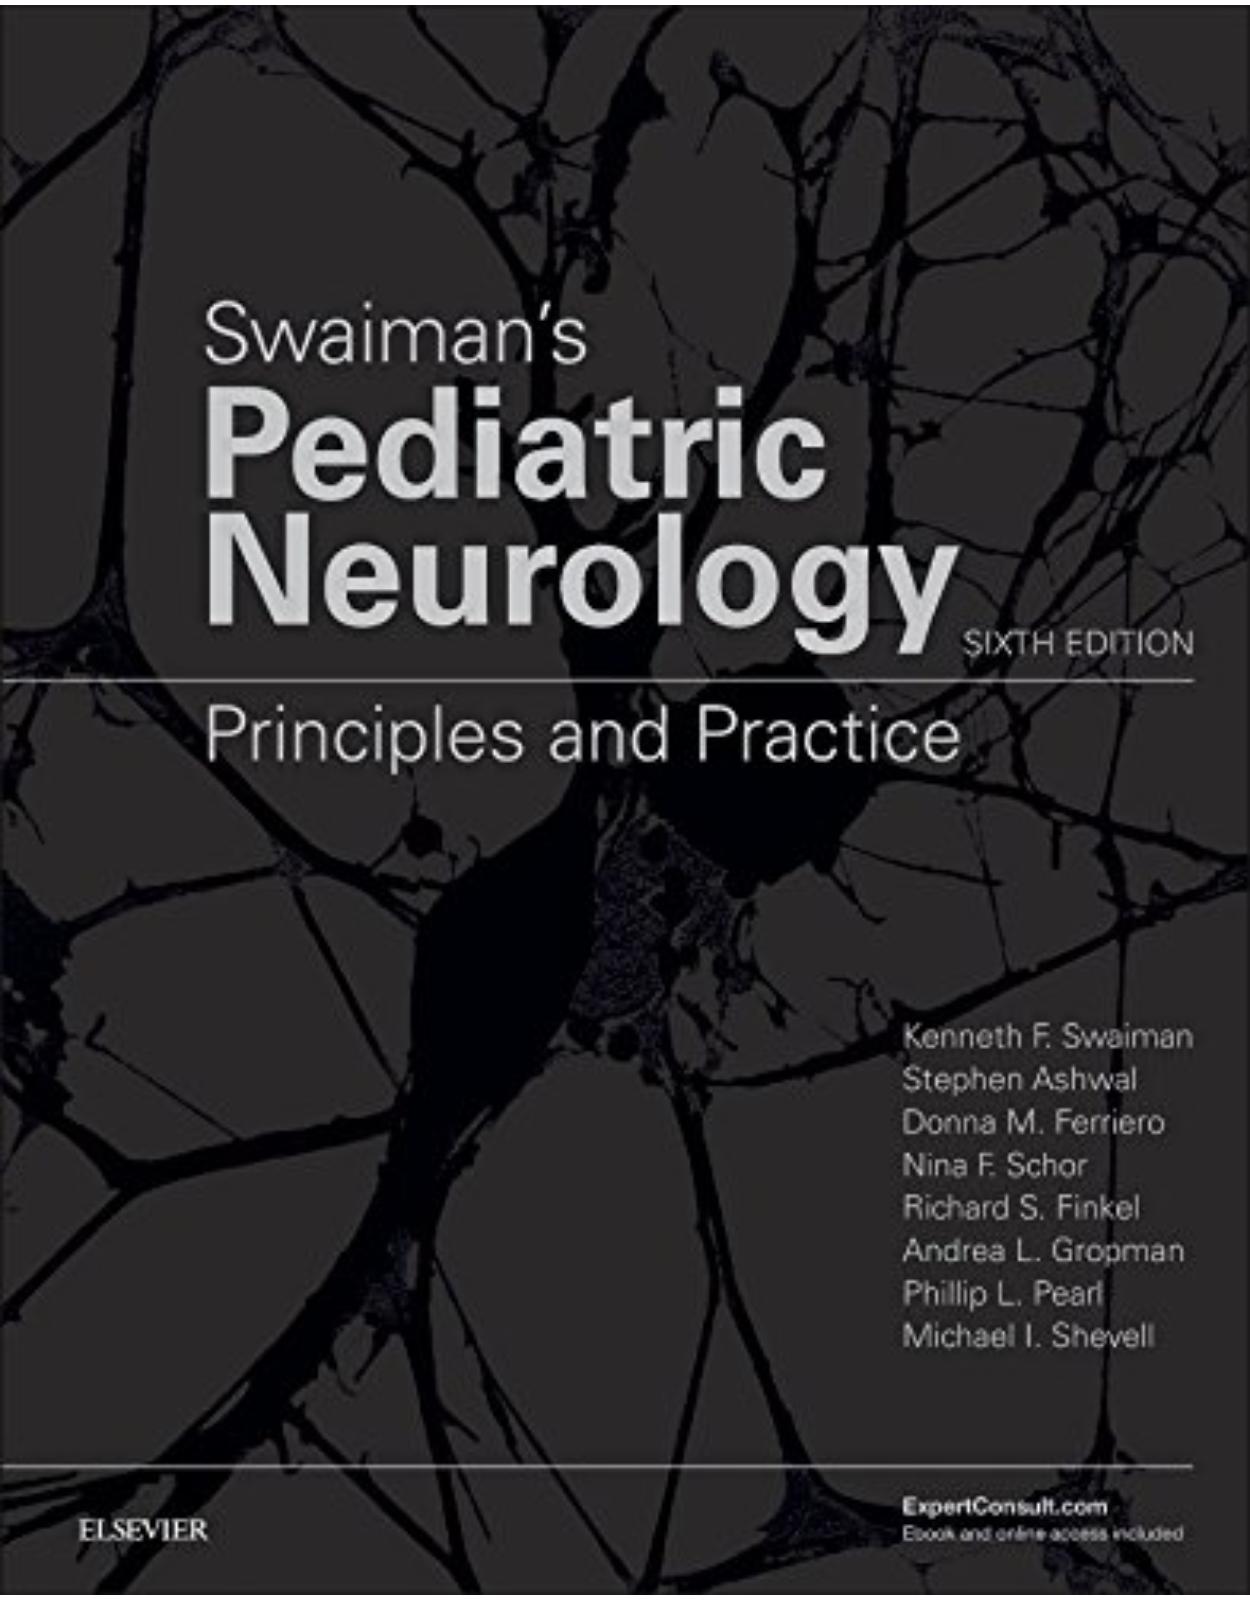 Swaiman's Pediatric Neurology, 6th Edition